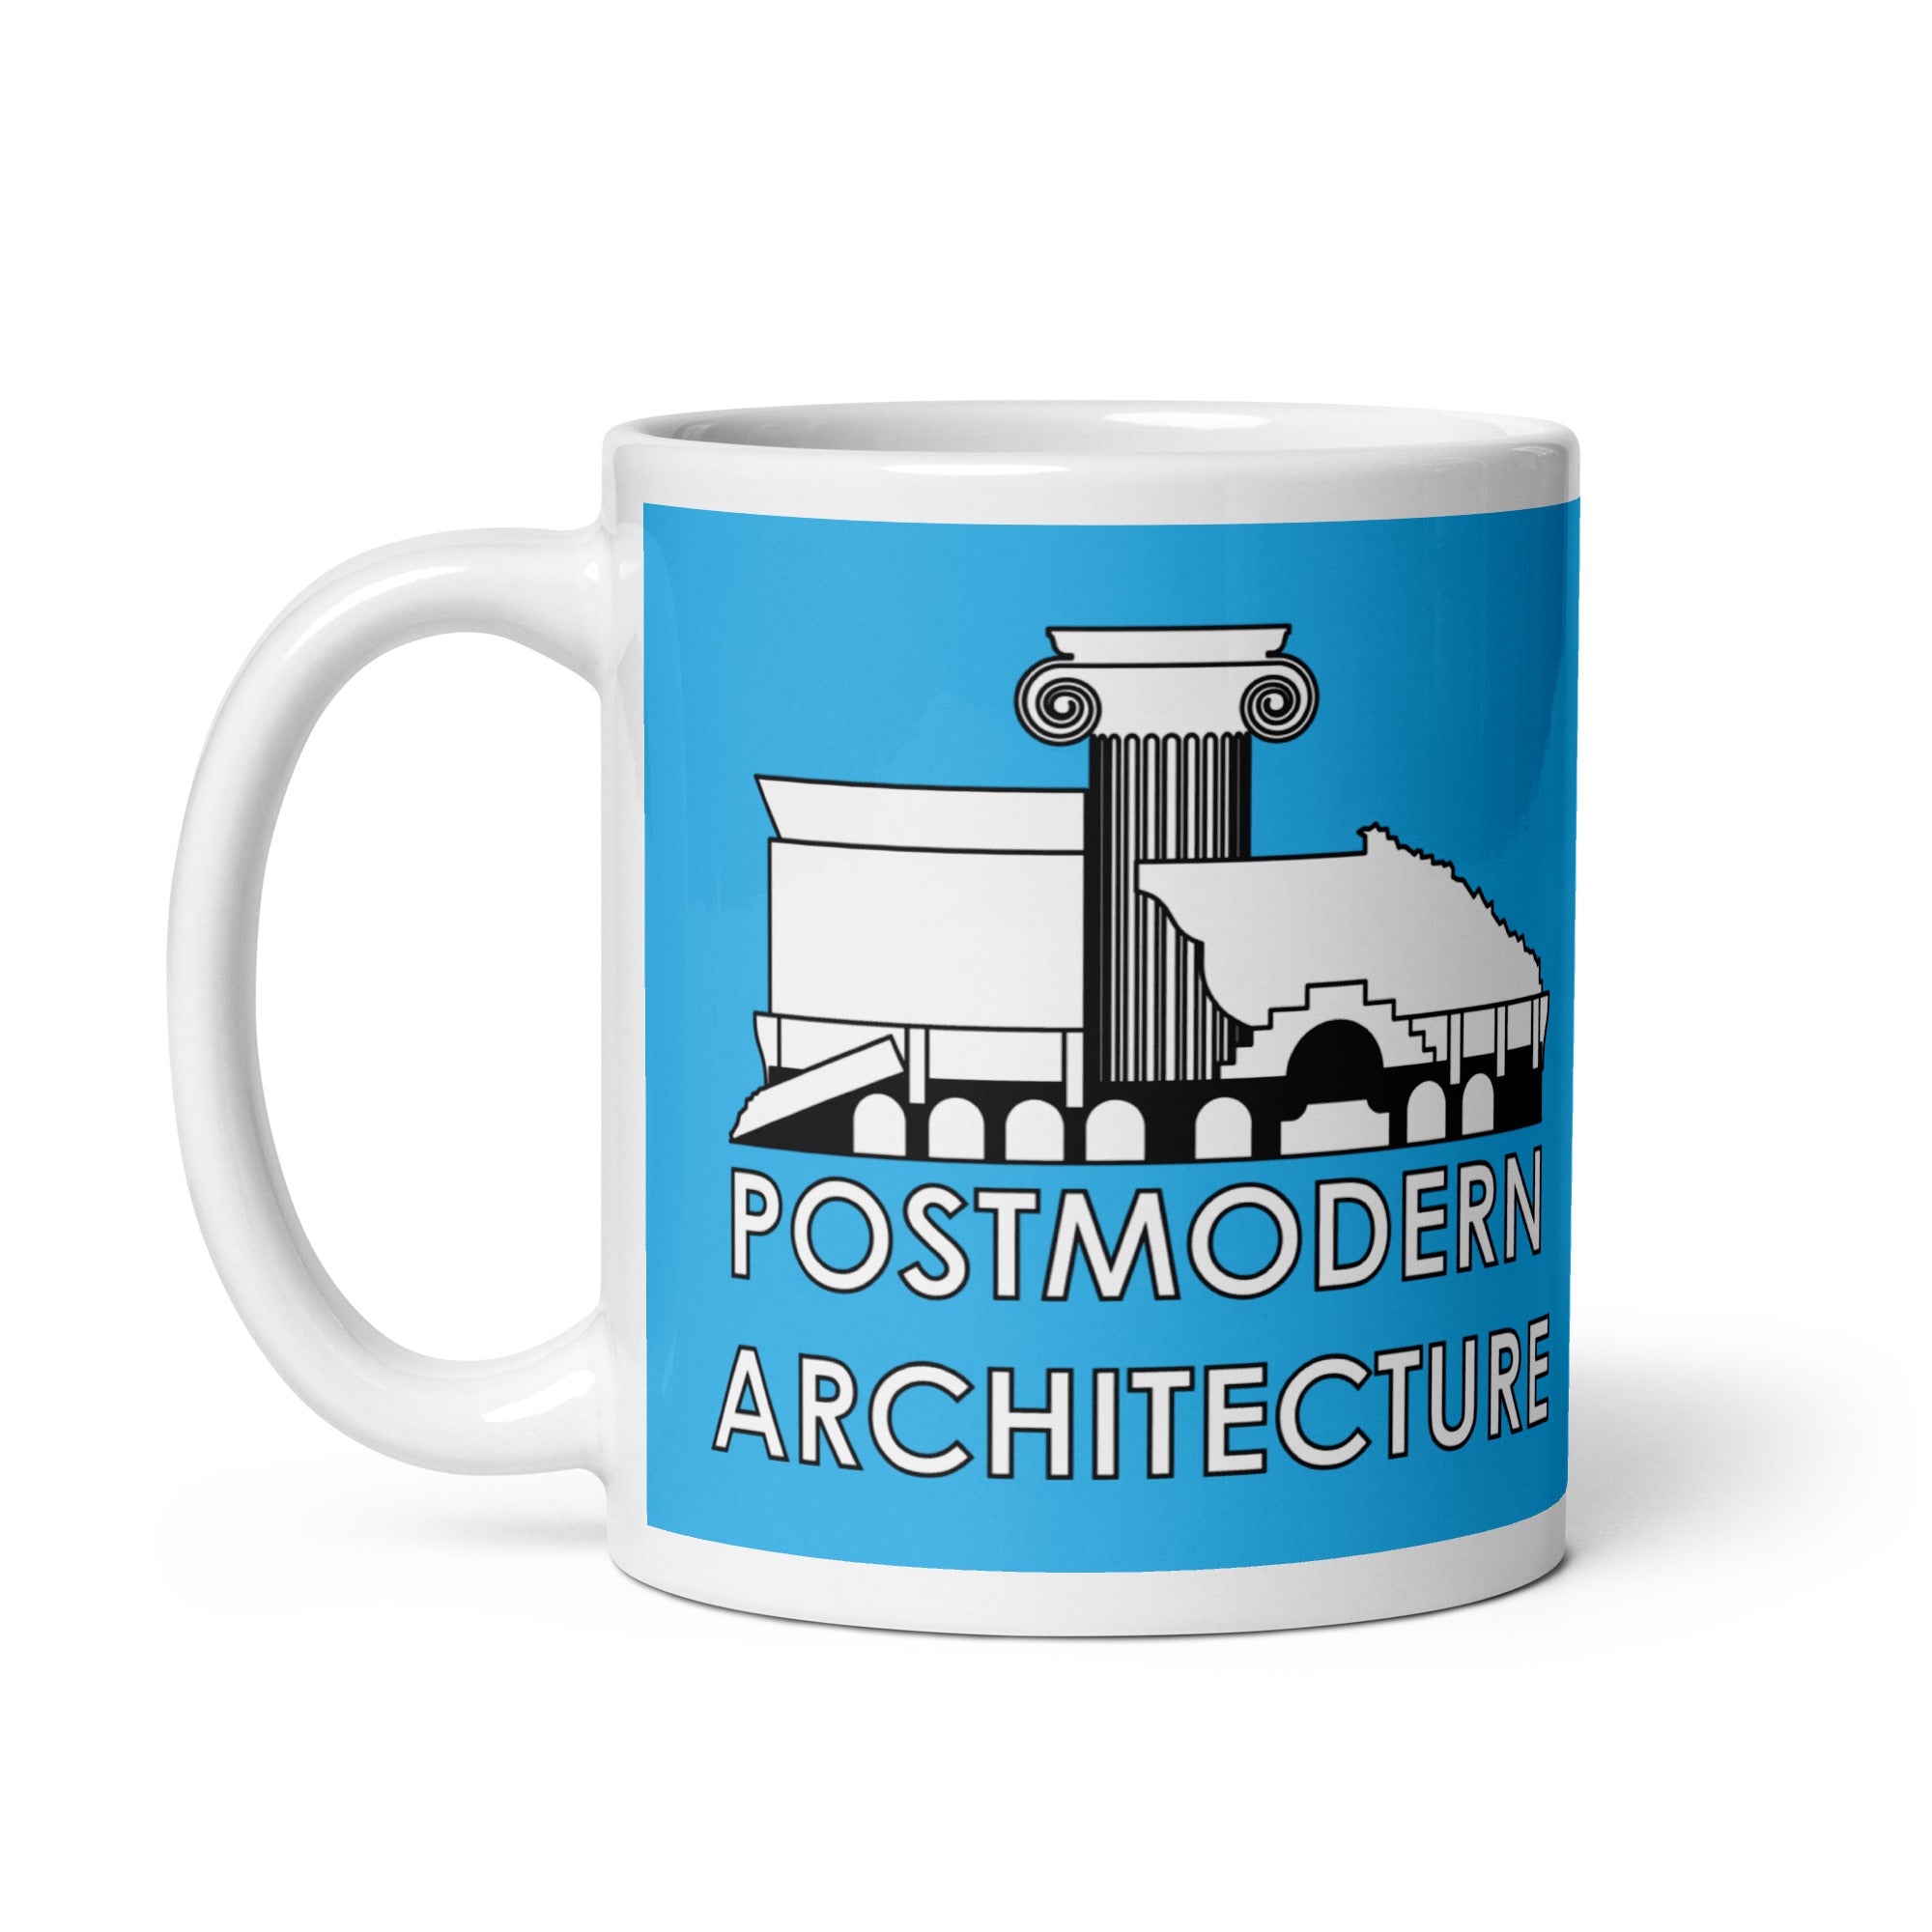 "Postmodern Architecture" Mug